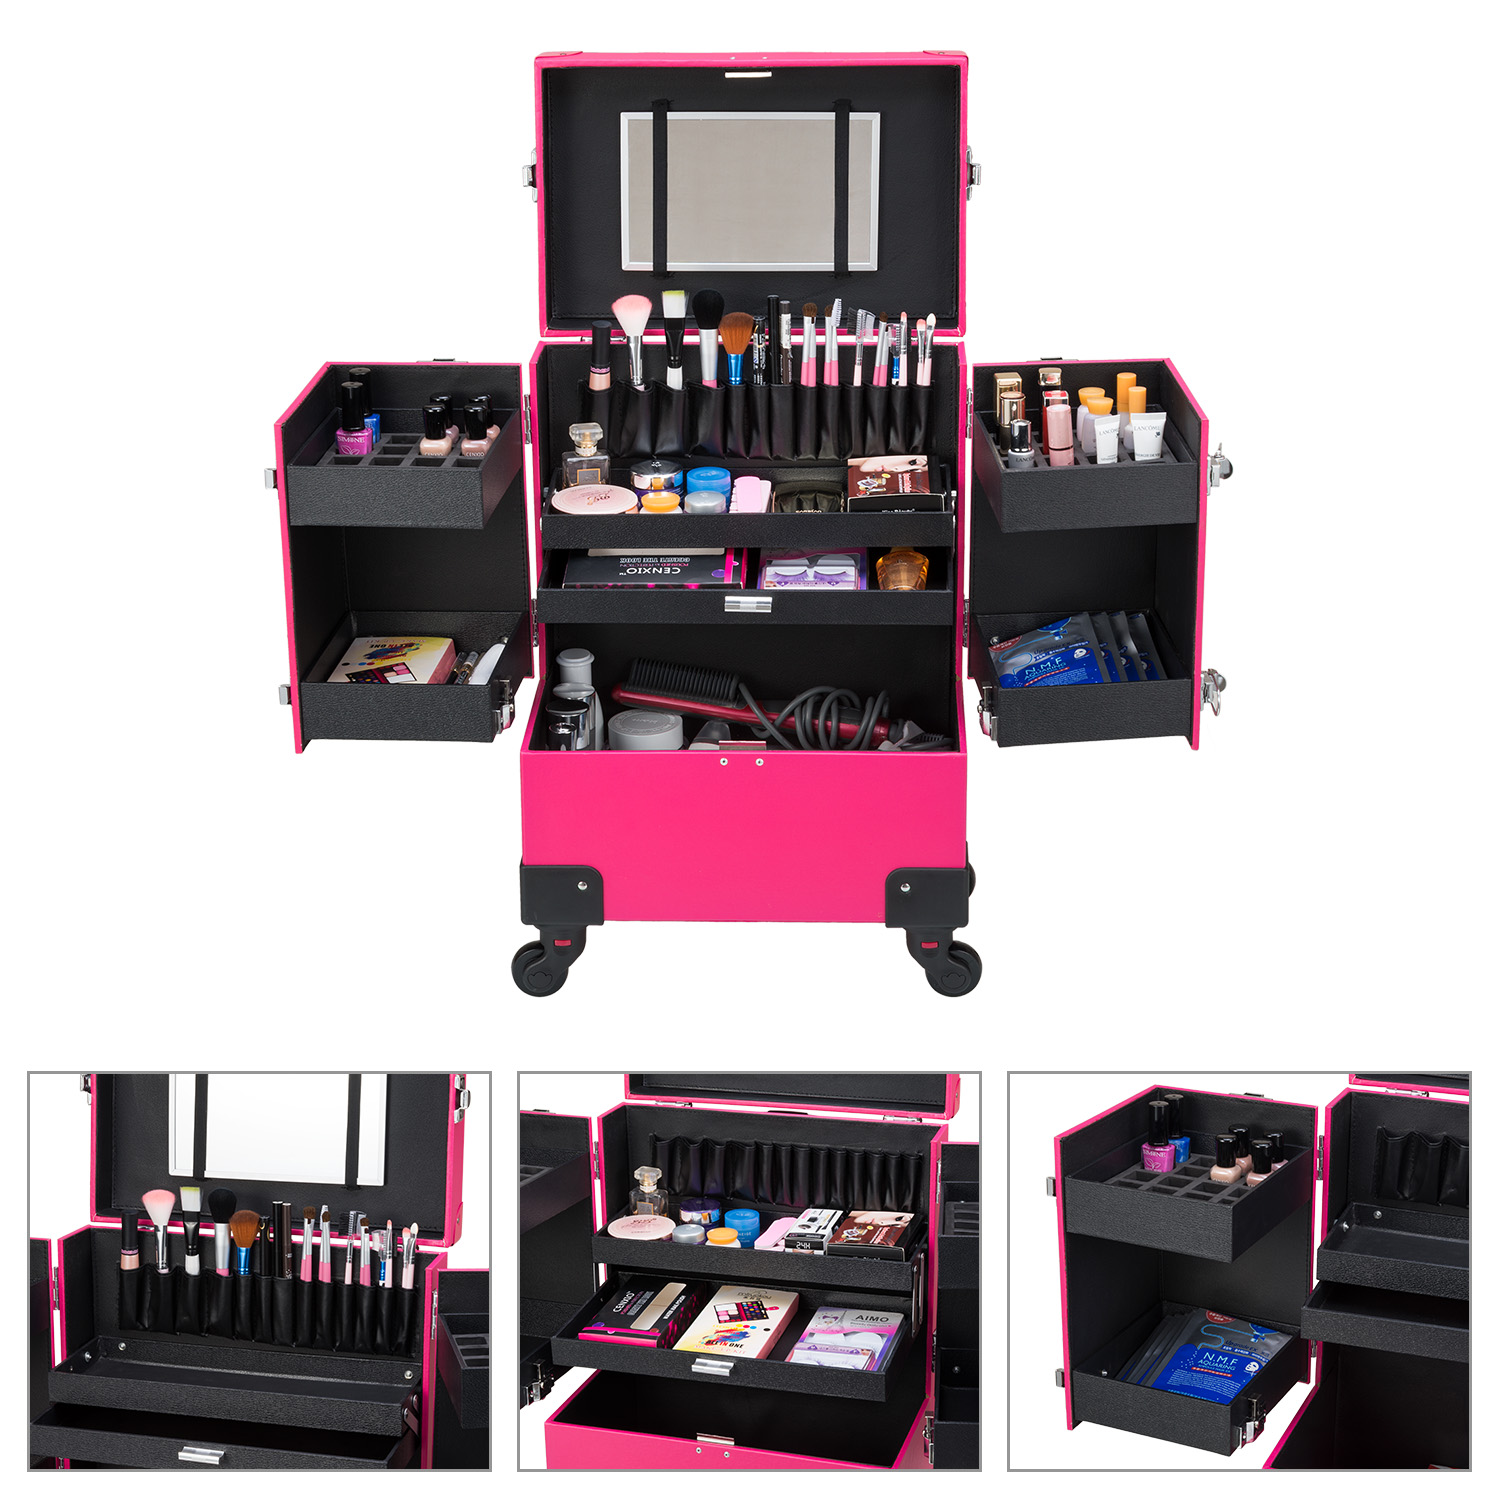 Ollieroo Rolling Wheels Makeup Train Case Lockable PU Artist Makeup Cosmetic Train Case,Rose-Pink - image 4 of 9